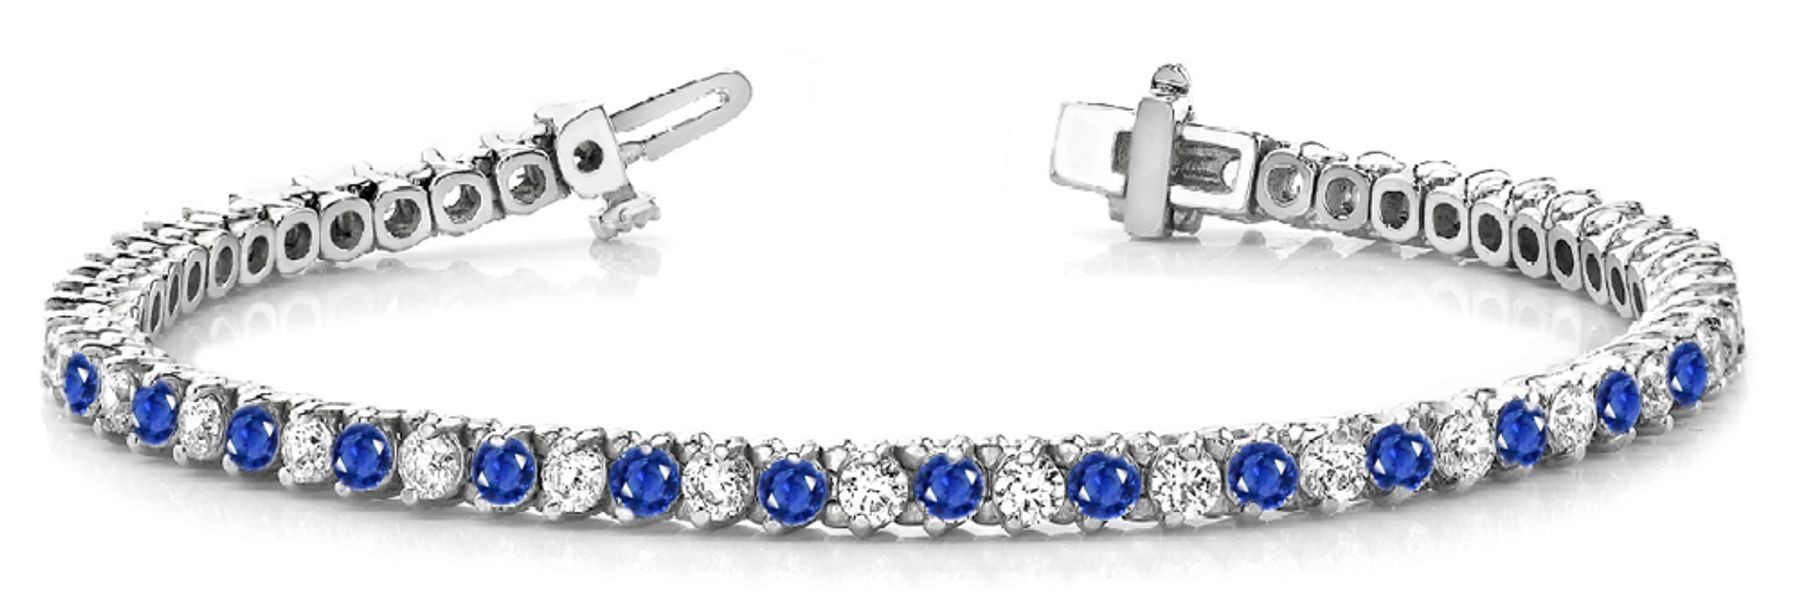 Sapphire & Diamond Bracelet and Necklace